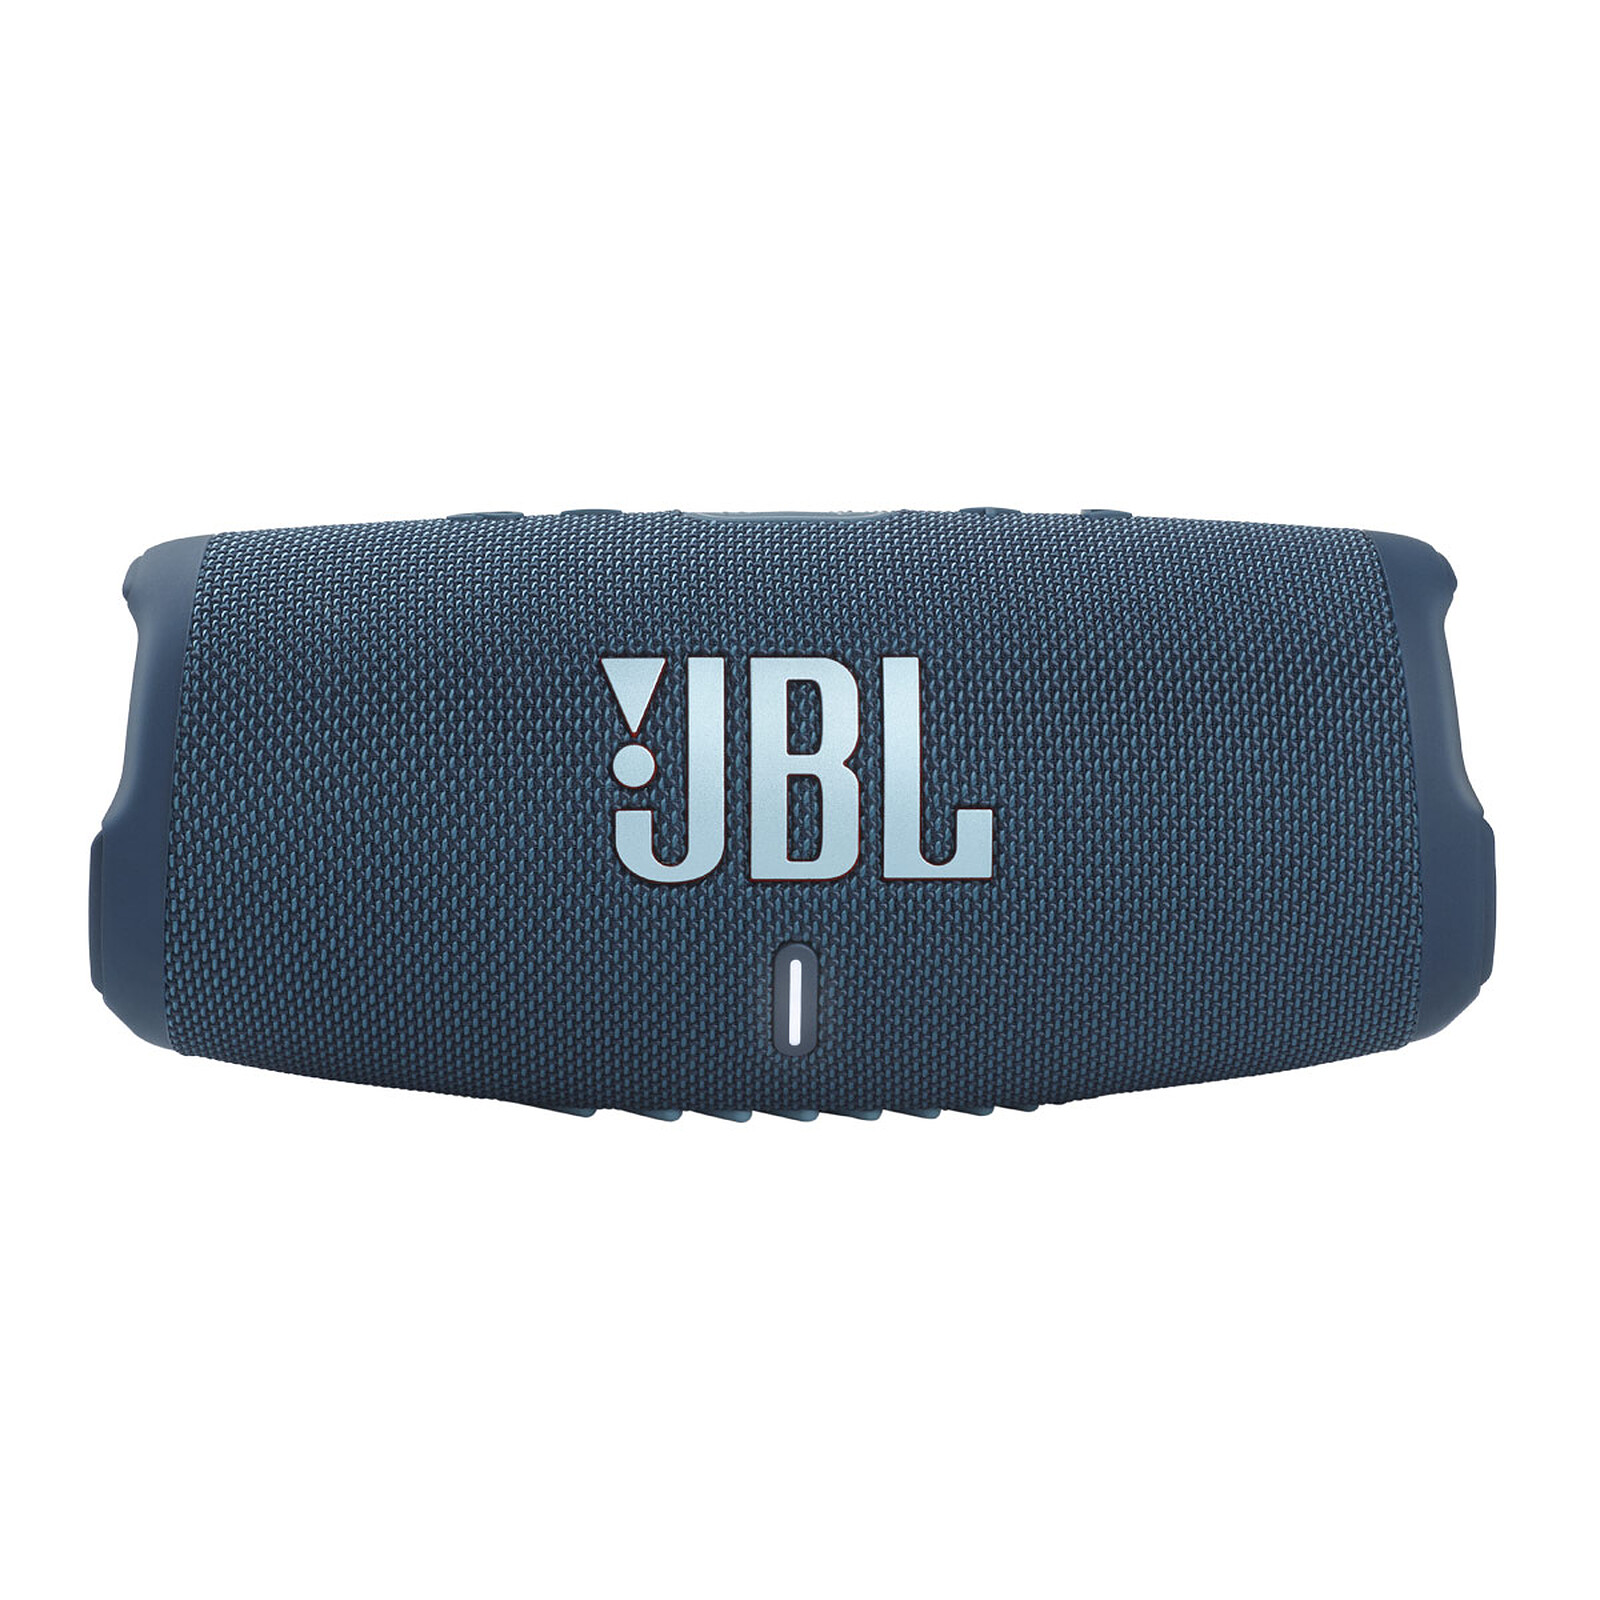 JBL CHARGE 5 - Altavoz Bluetooth portátil con IP67 impermeable y carga USB,  color verde azulado